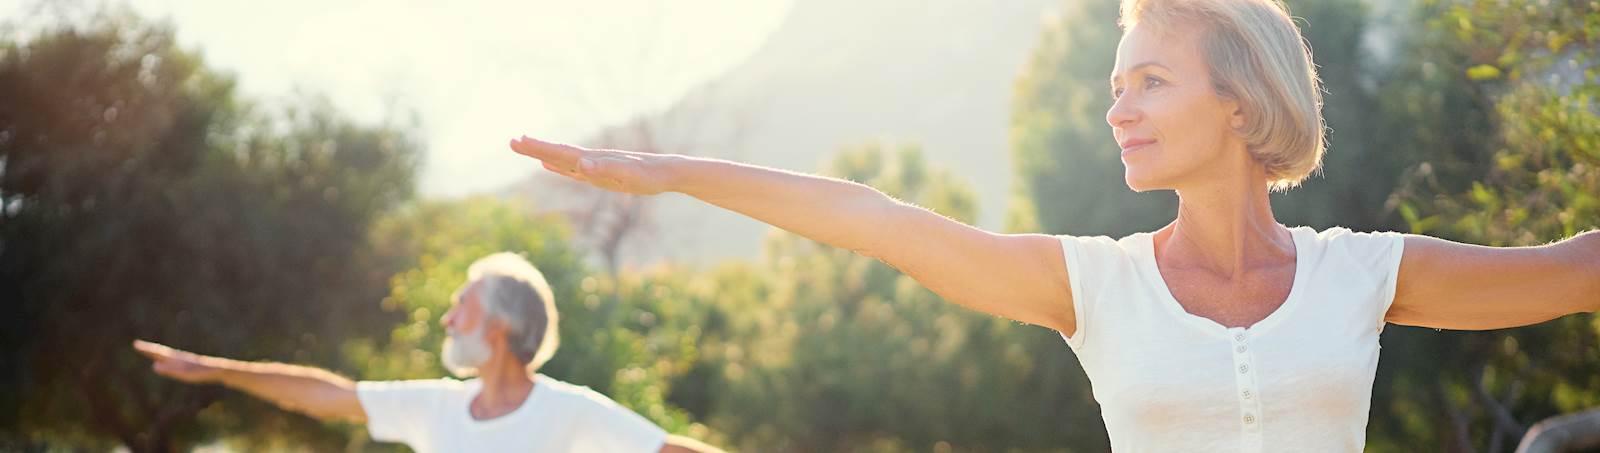 woman using health savings accounts benefits doing yoga outside